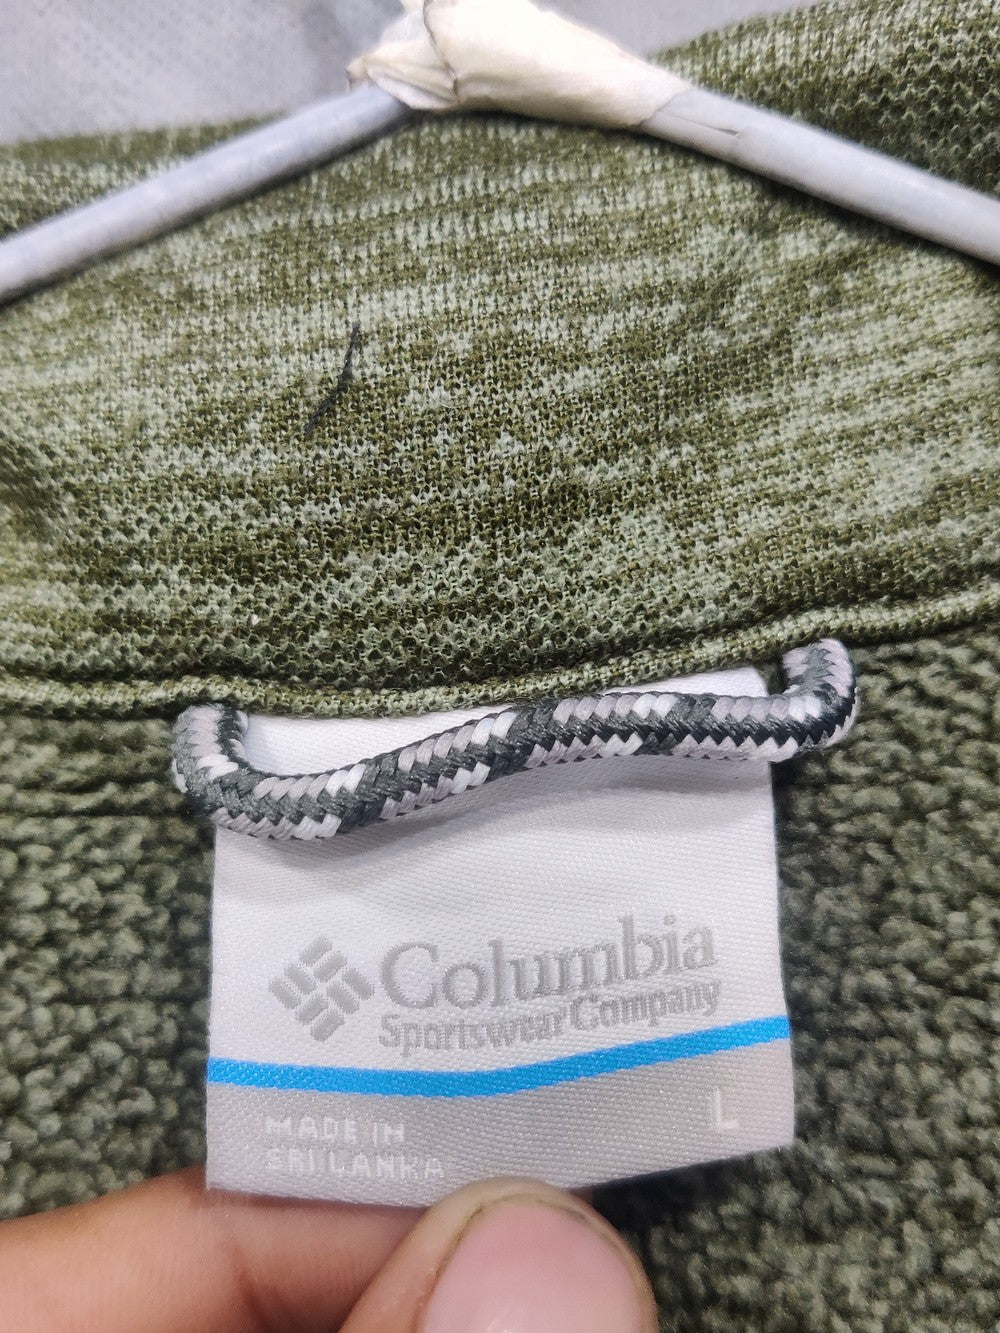 Columbia Branded Original Sports Collar Zipper For Men